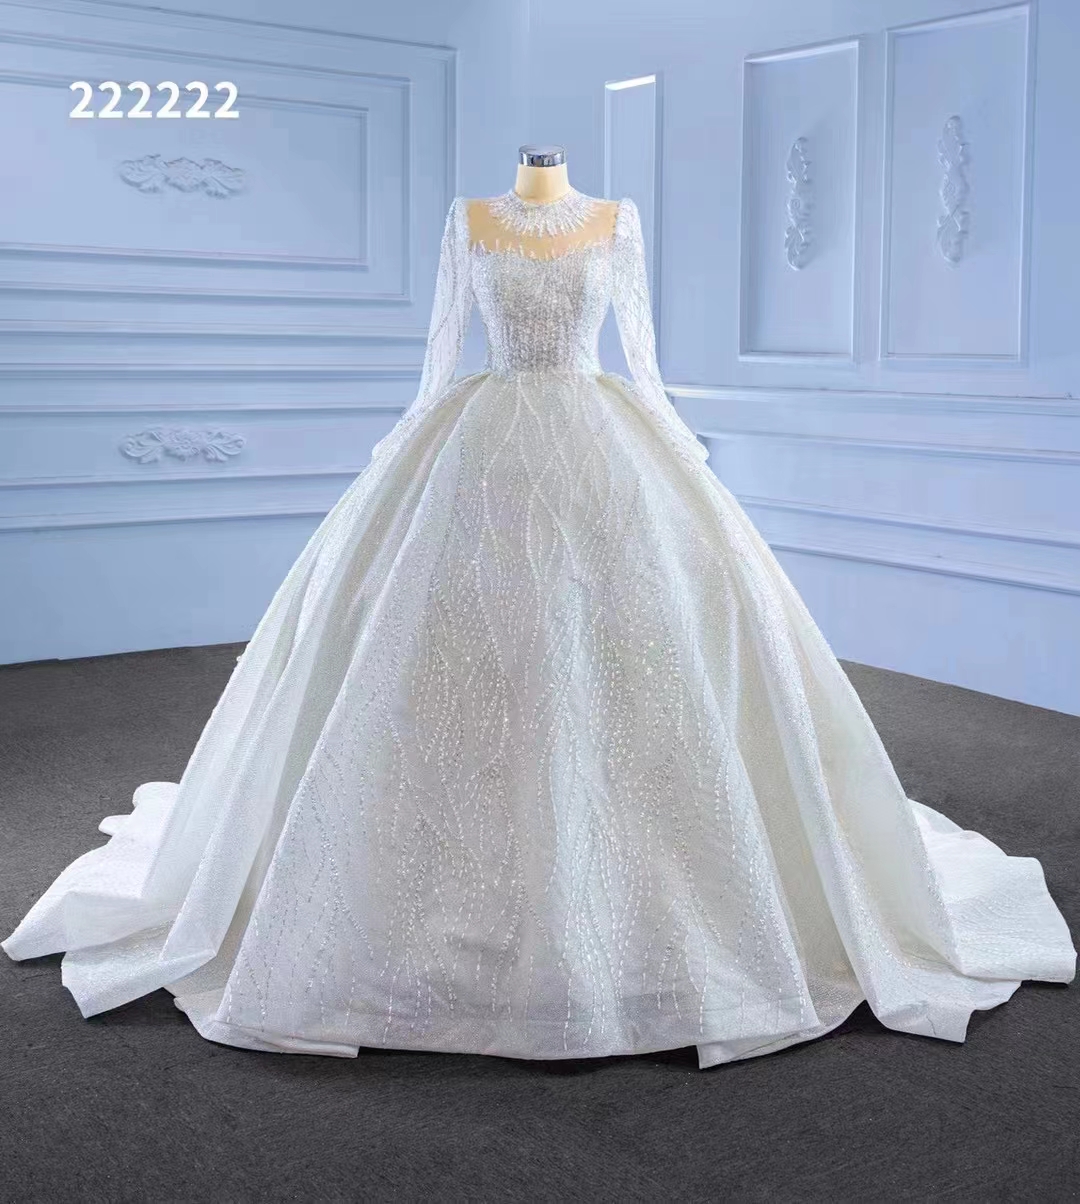 Vestido de noiva de colarinho alto branco de colarinho longo pérola de luxo tule tule backless work sm2222222